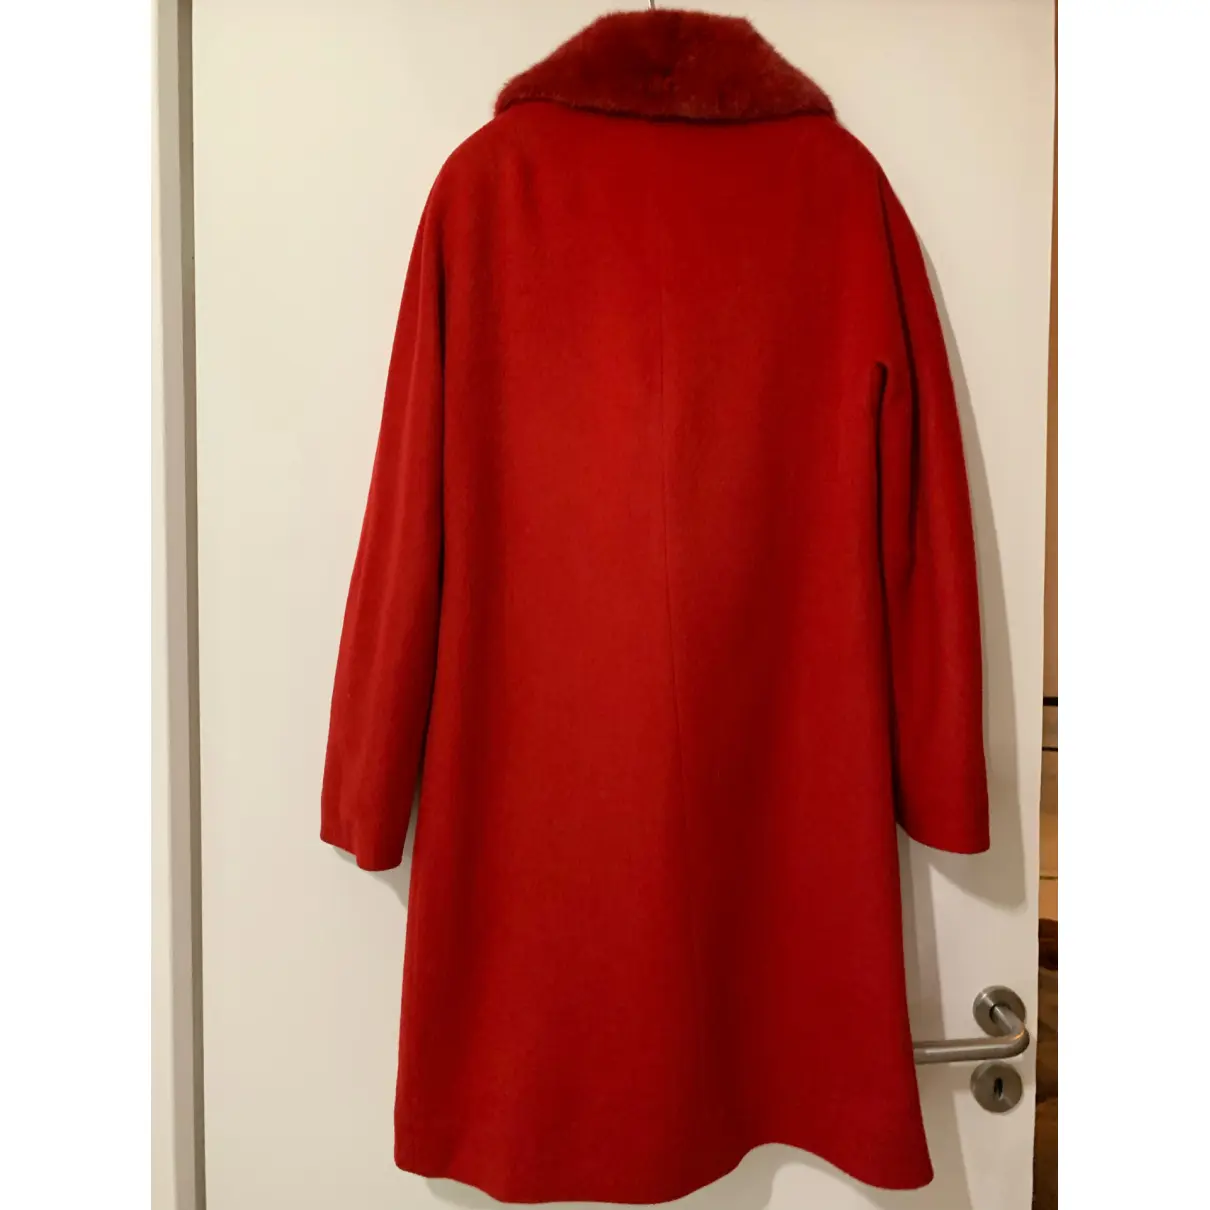 Buy Sprung Frères Wool coat online